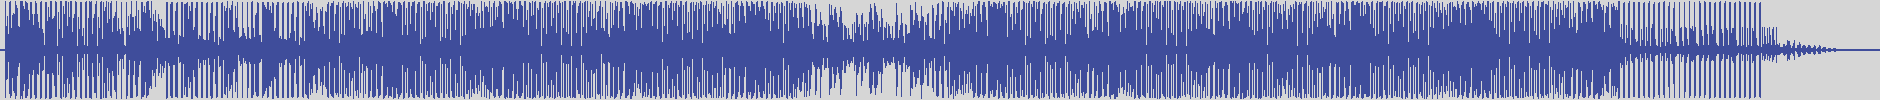 nf_boyz_records [NFY027] Sensation 24 - Jack the Horse [Long Beach Mix] audio wave form